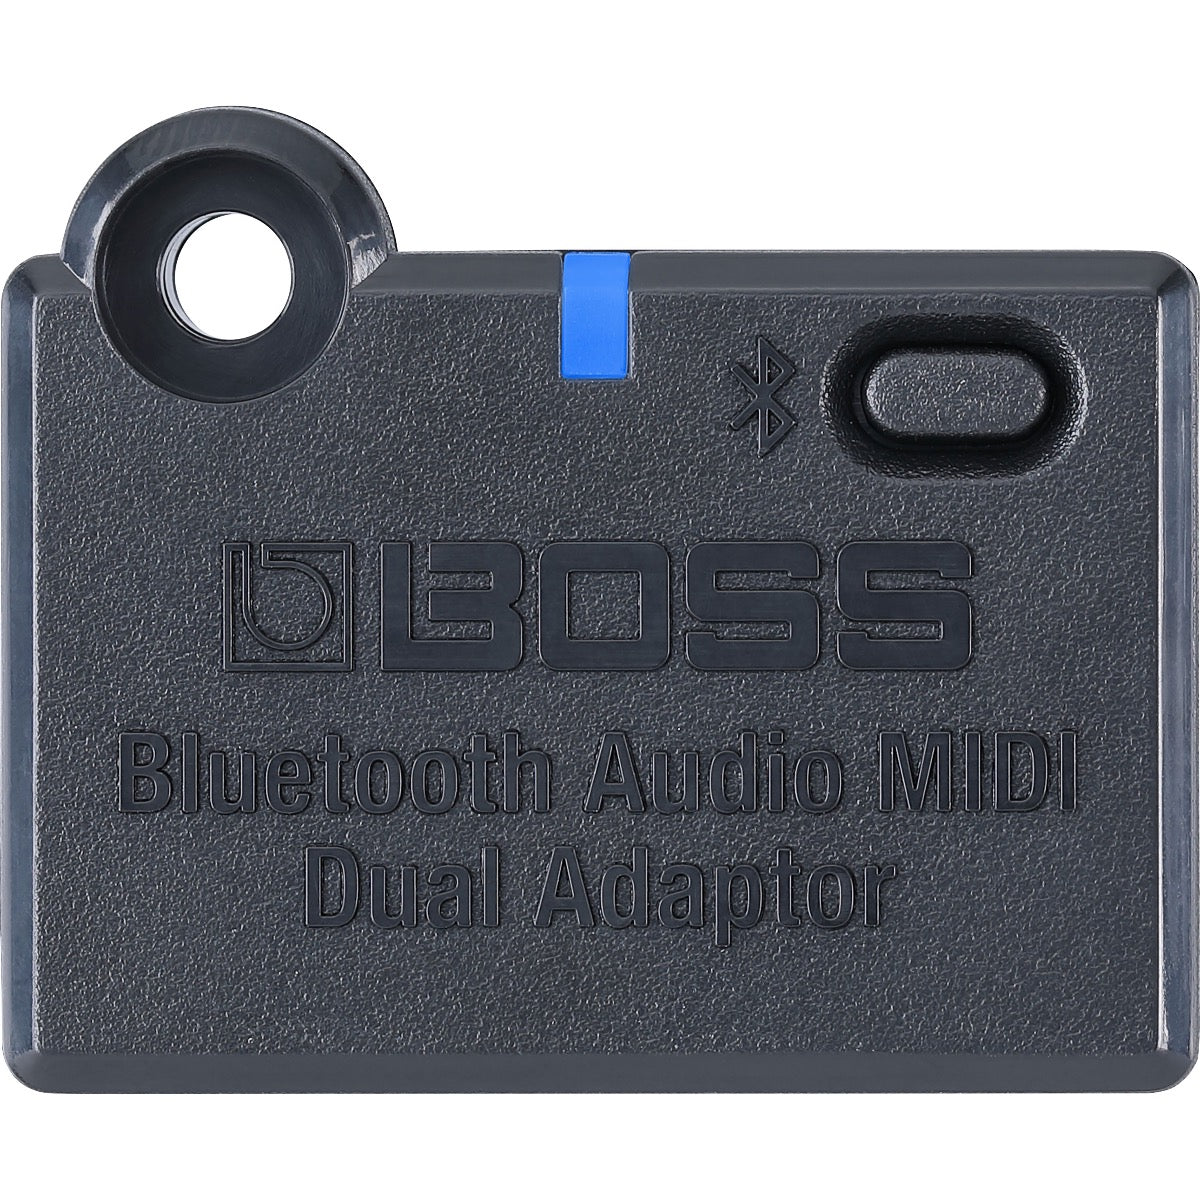 Front view of Boss BT-Dual Bluetooth Audio MIDI Dual Adaptor